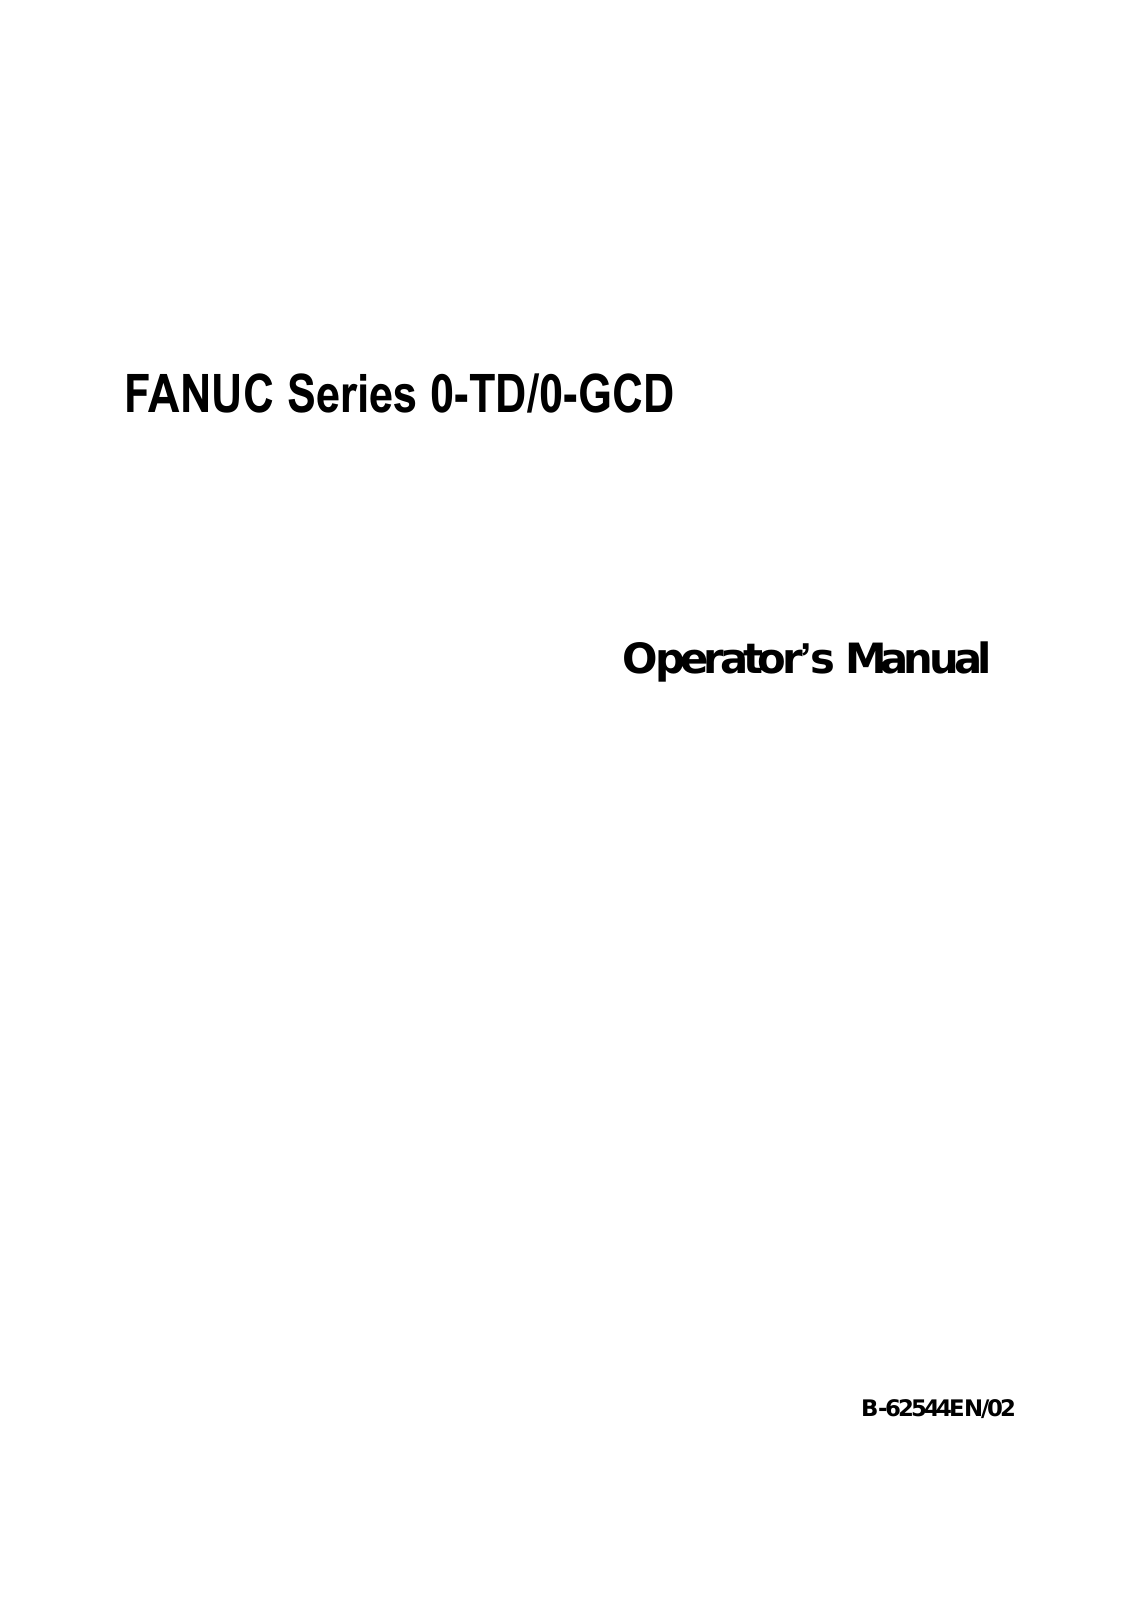 fanuc 0-TD, 0-GCD Operators Manual